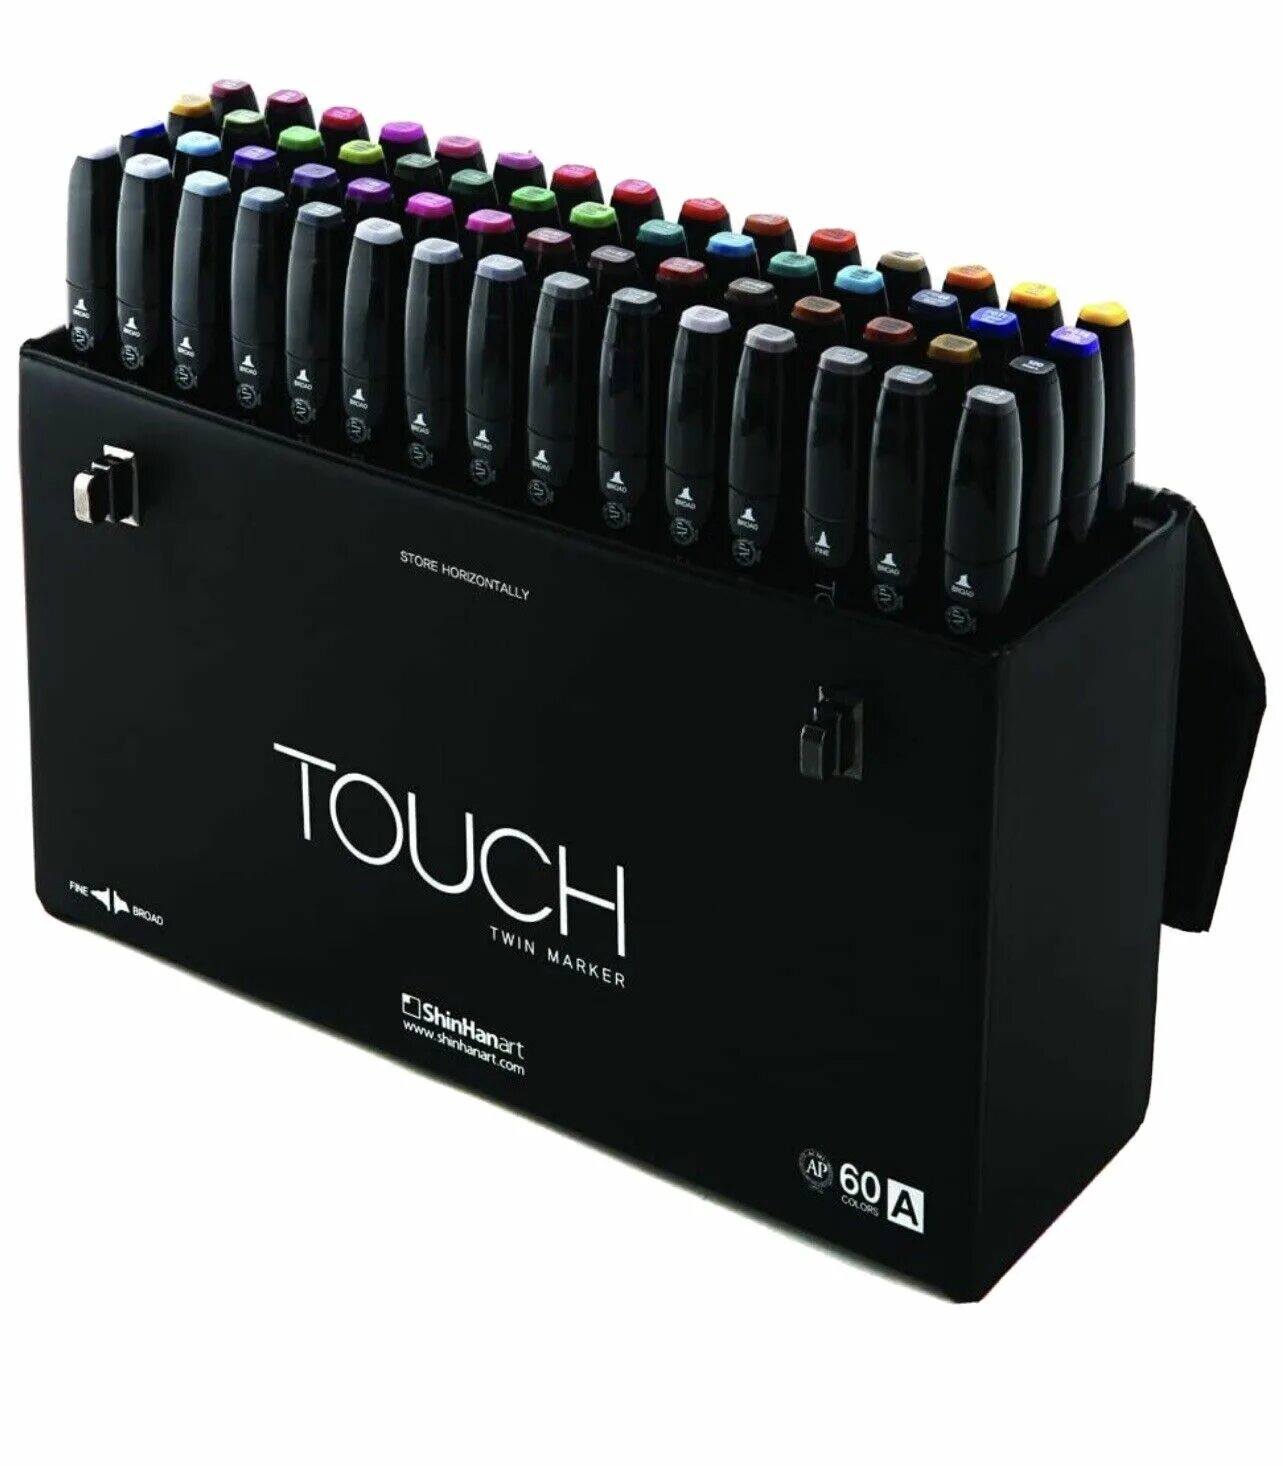 Набор маркеров Touch Raven Twin. Touch Twin Brush маркер. Twin Marker 60 цветов. Маркеры Touch lecai 60 цветов.